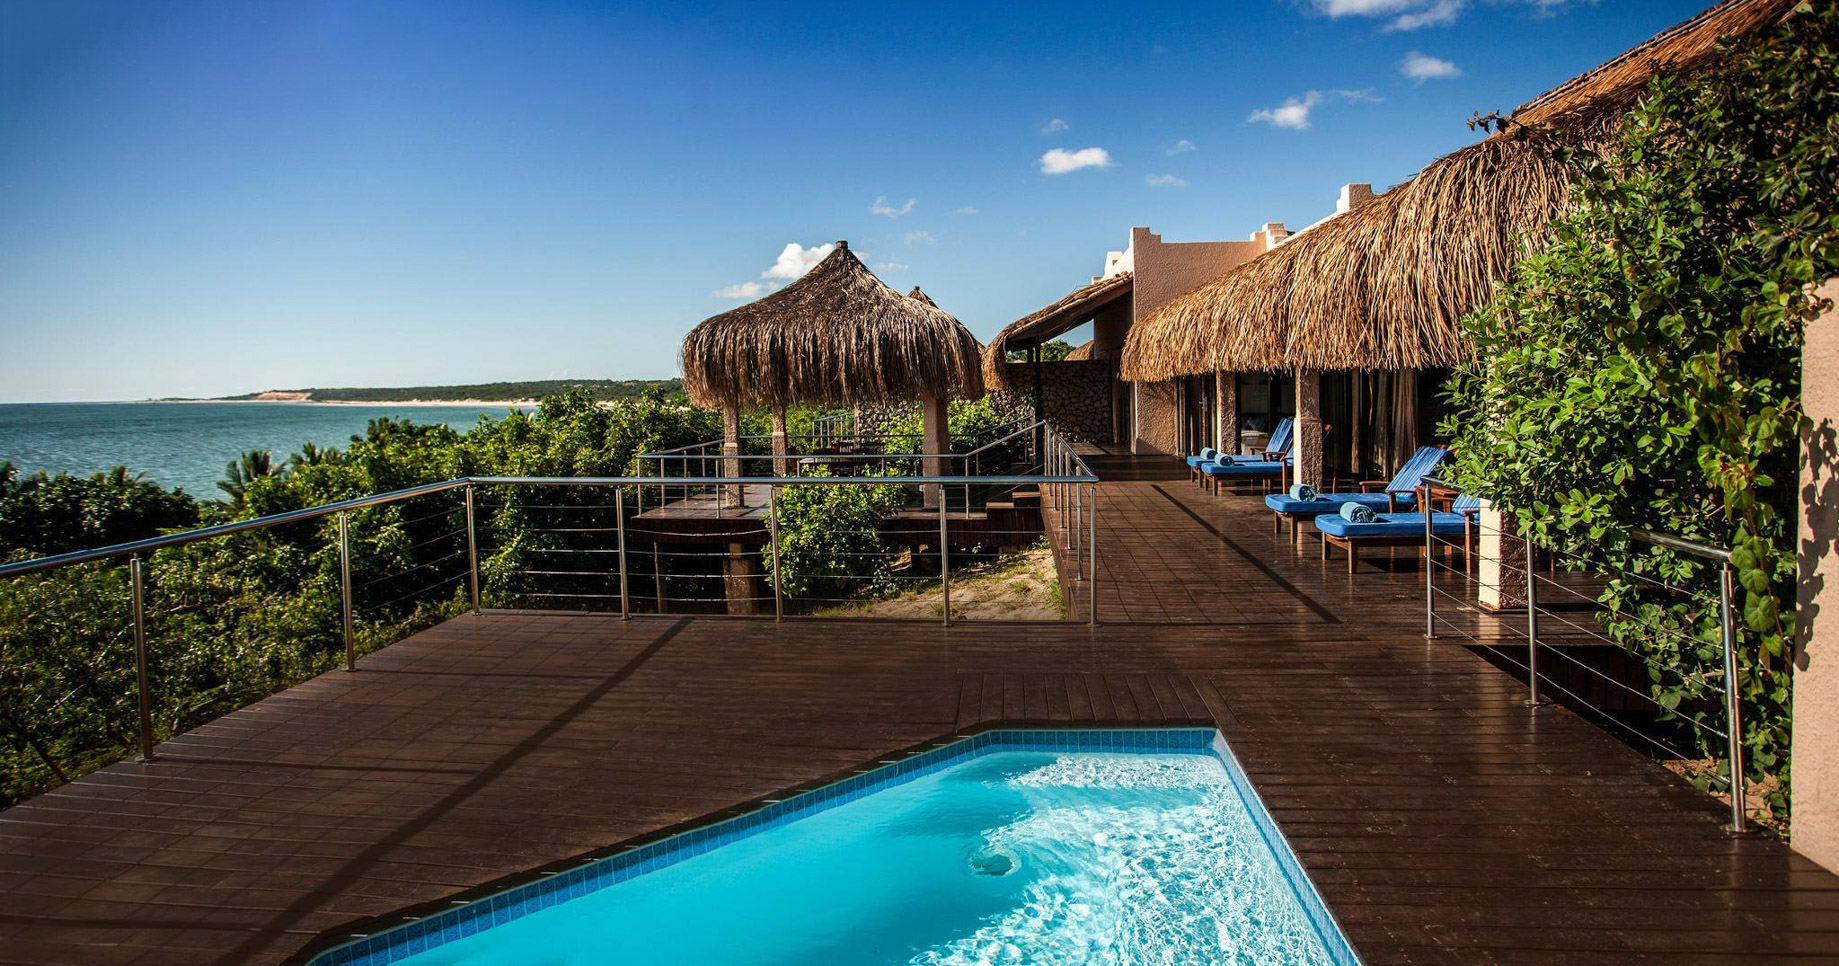 Anantara Bazaruto Island Resort – Mozambique – Villa Deck View